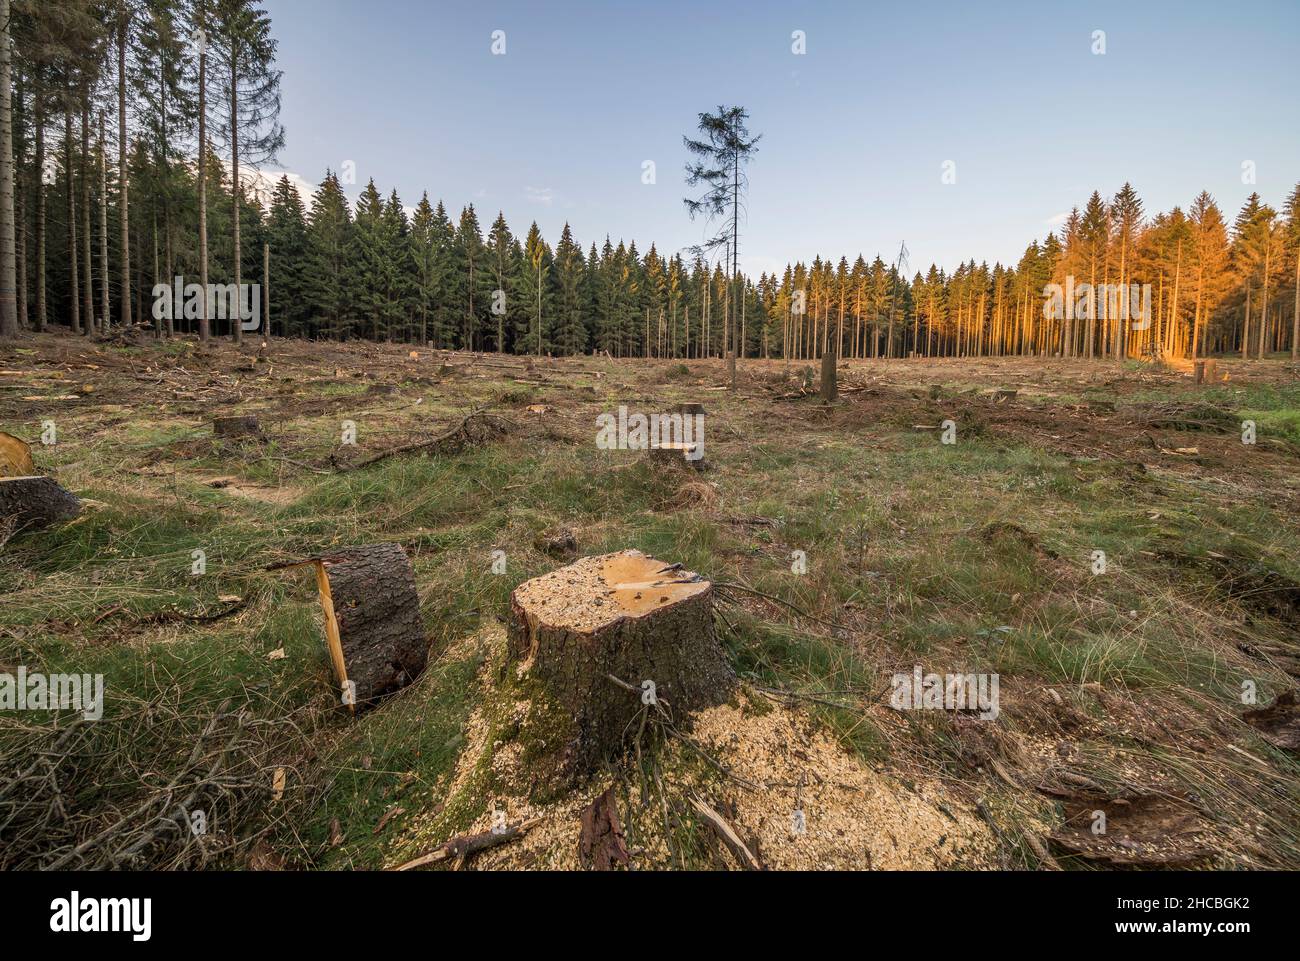 Spruce trees damaged by bark beetle infestation Stock Photo